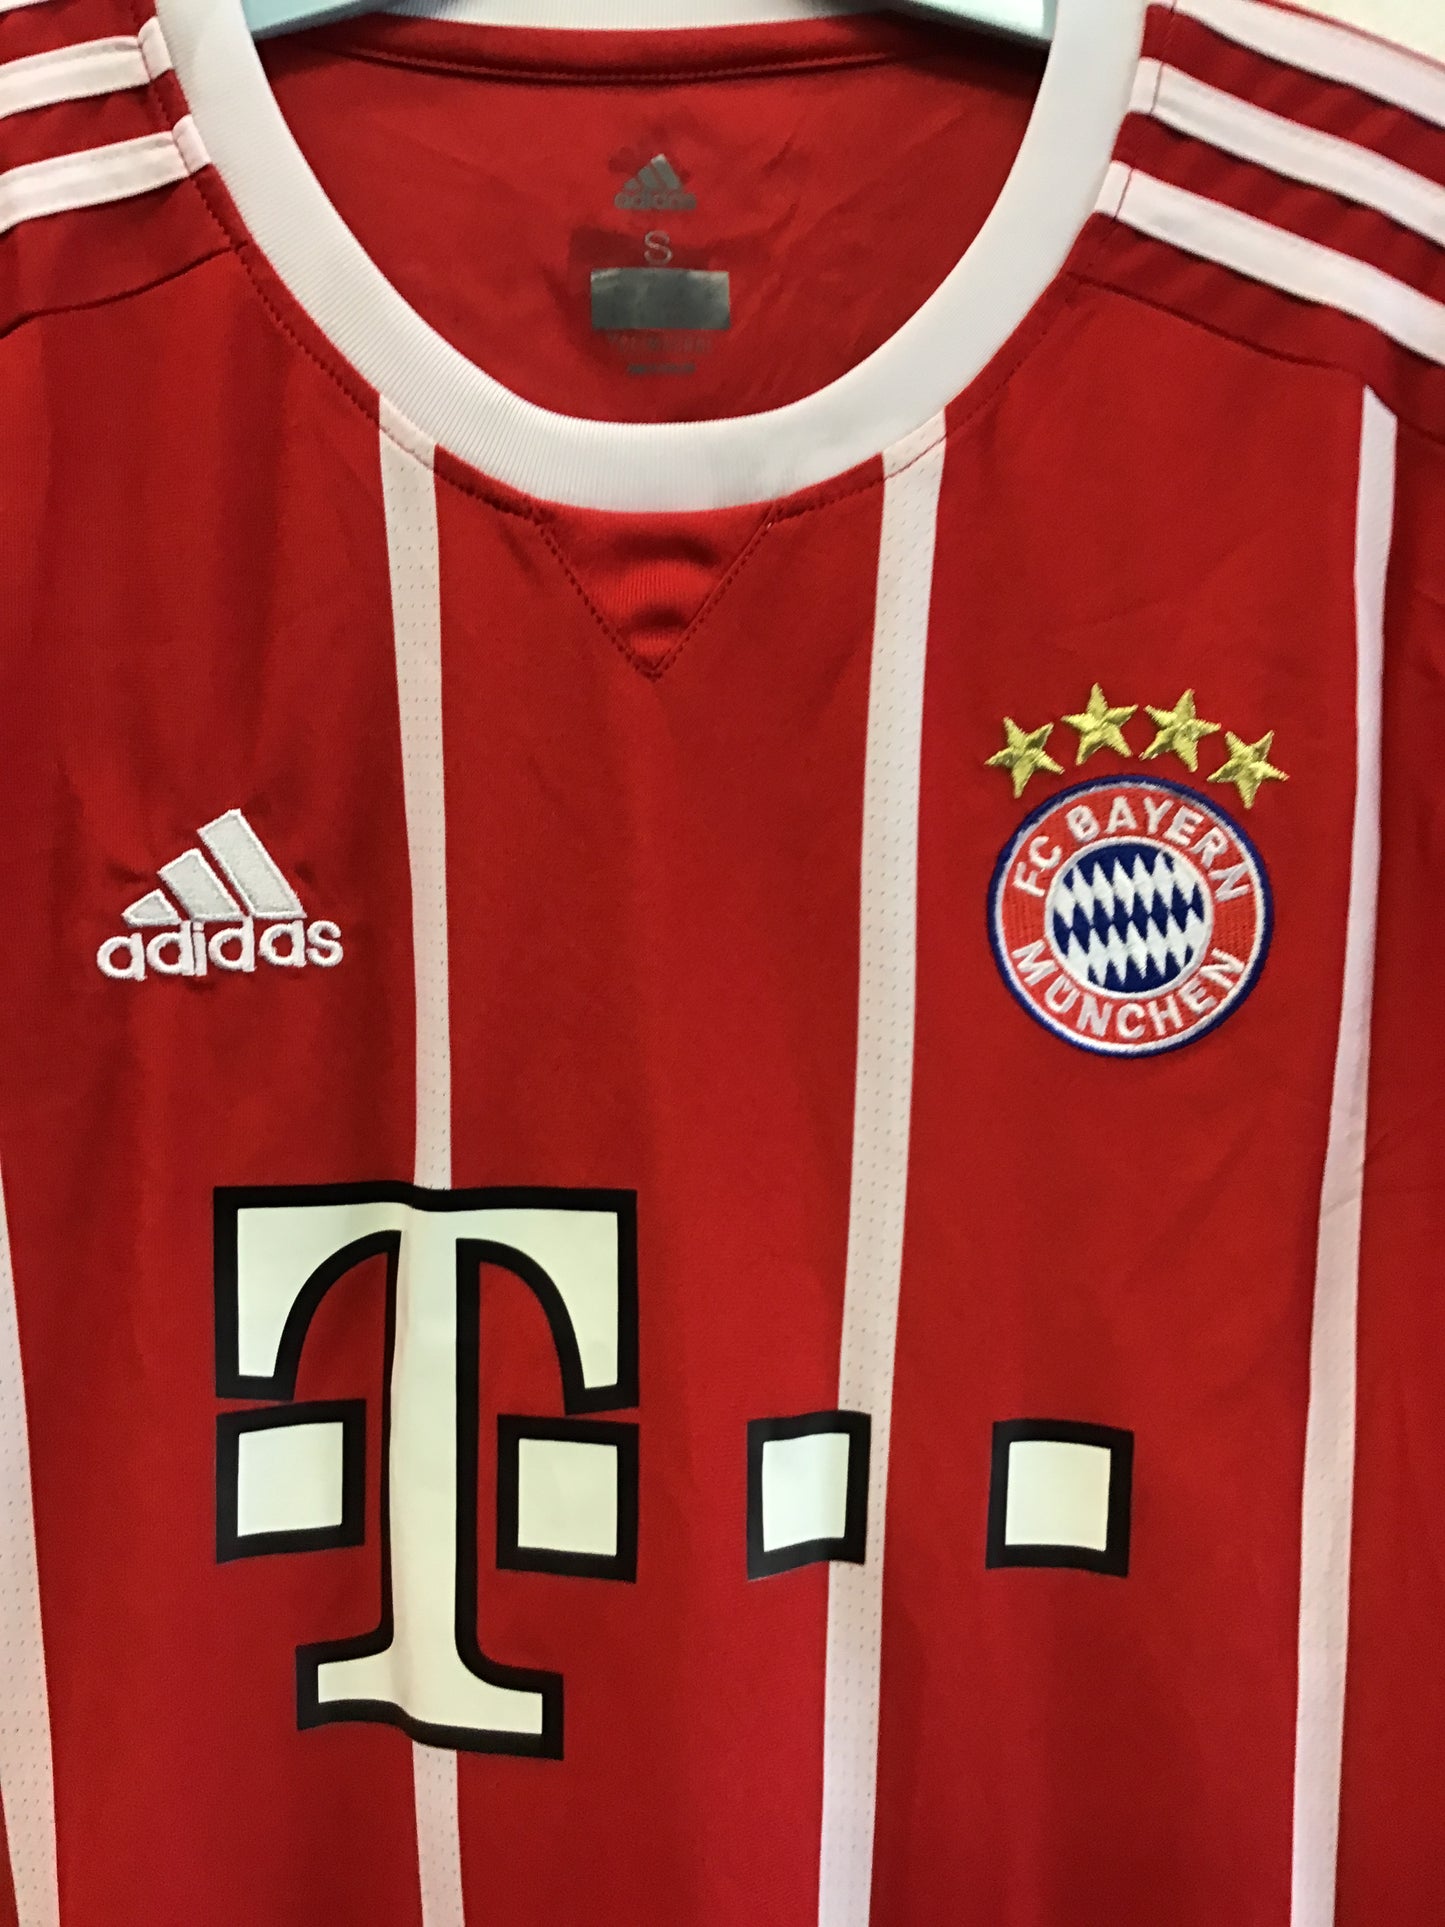 Adidas FC Bayern Munchen Bundesliga 2016/2017 Jersey, Size S